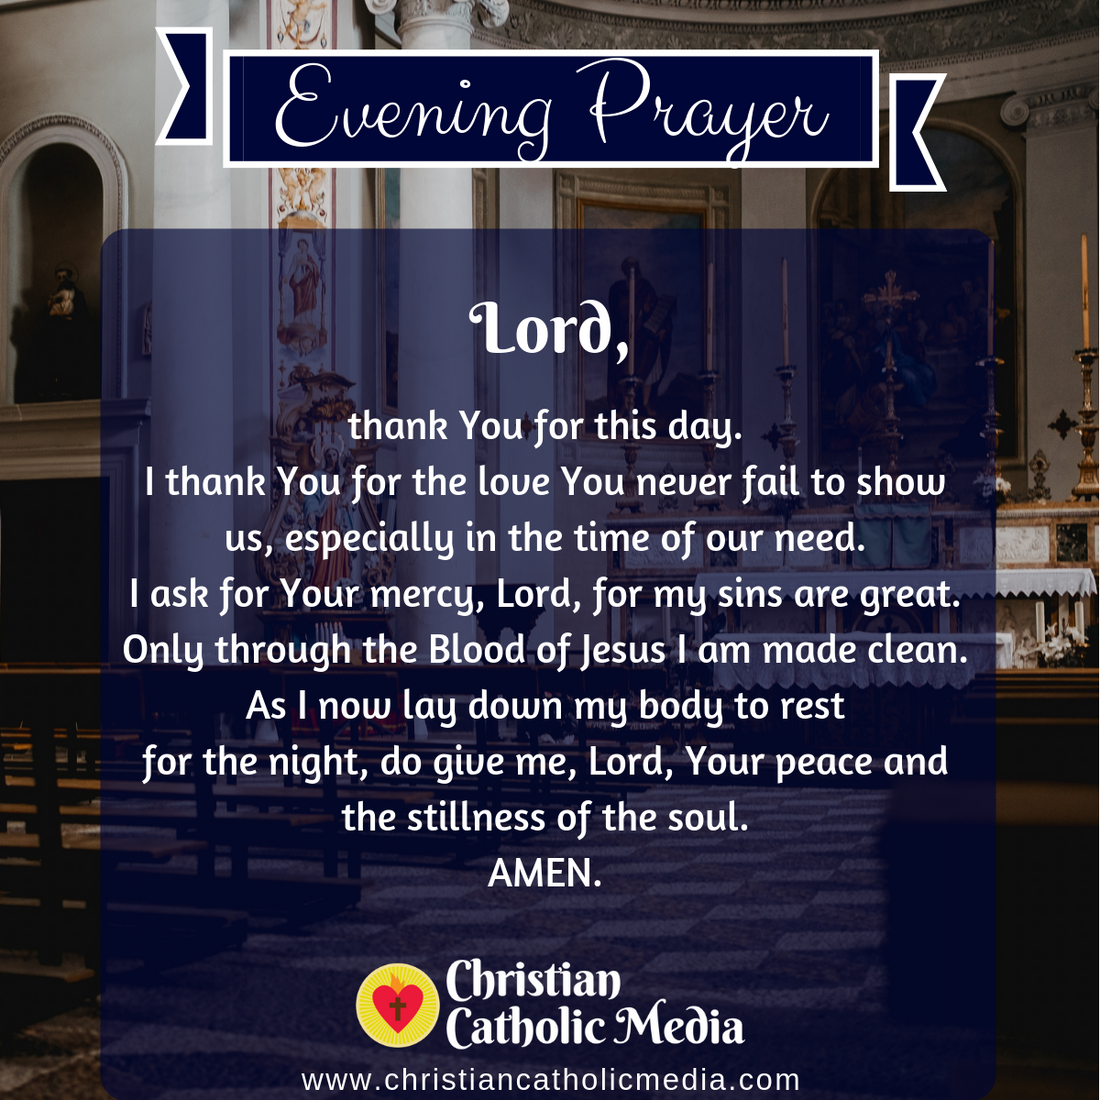 Evening Prayer Catholic Wednesday June 2, 2021